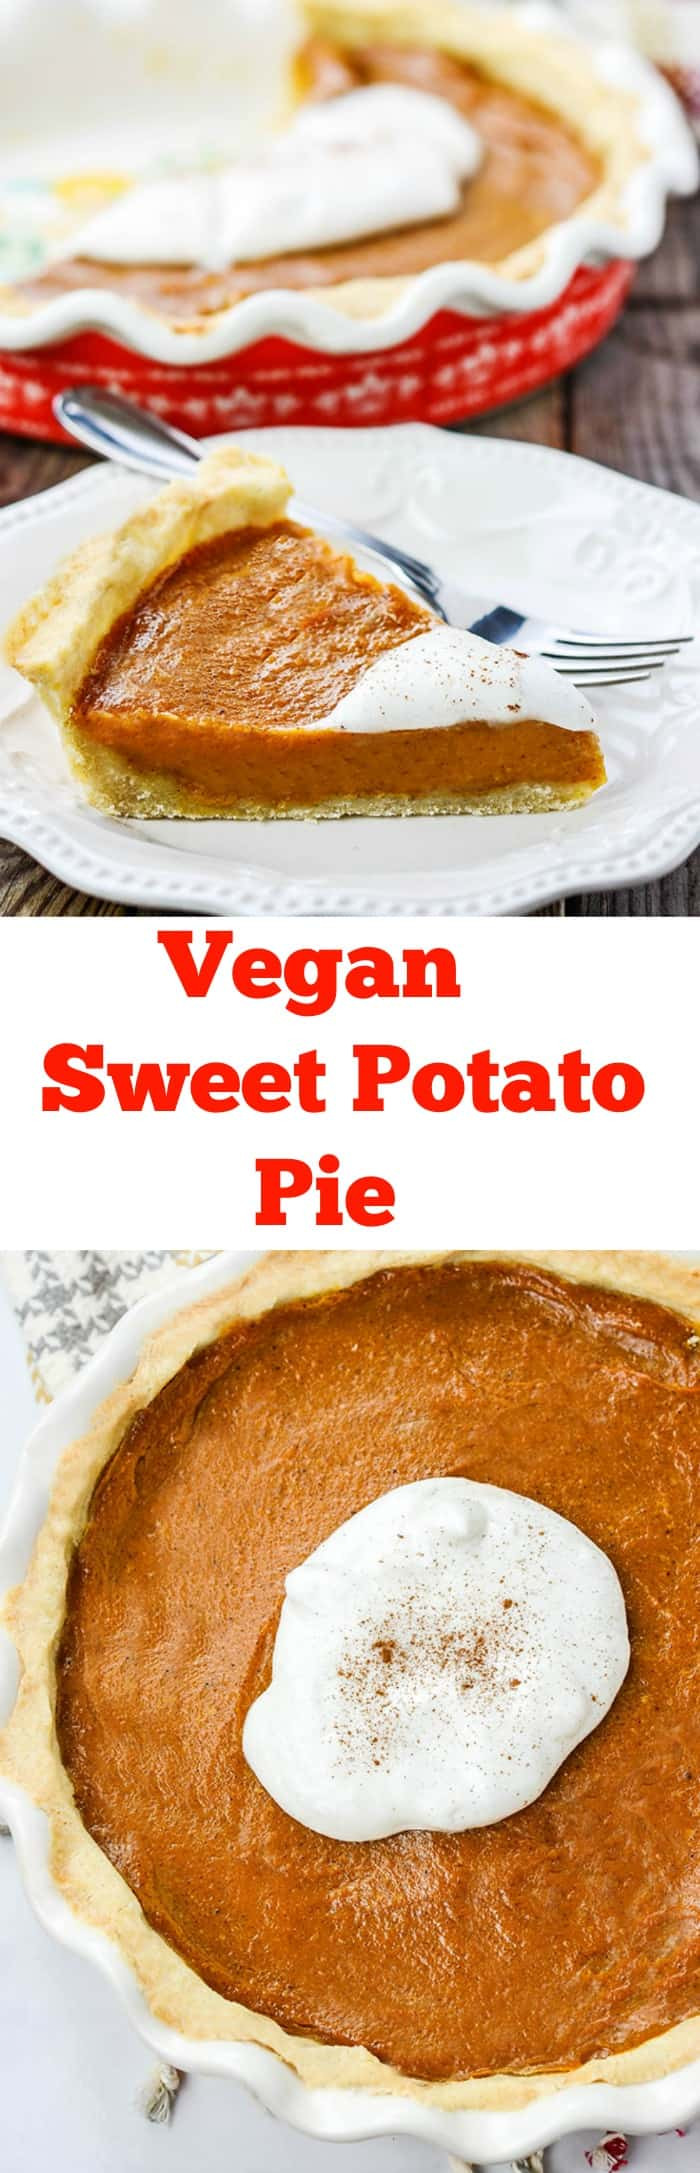 Sweet Potato Pie Vegan
 Vegan Sweet Potato Pie Healthier Steps